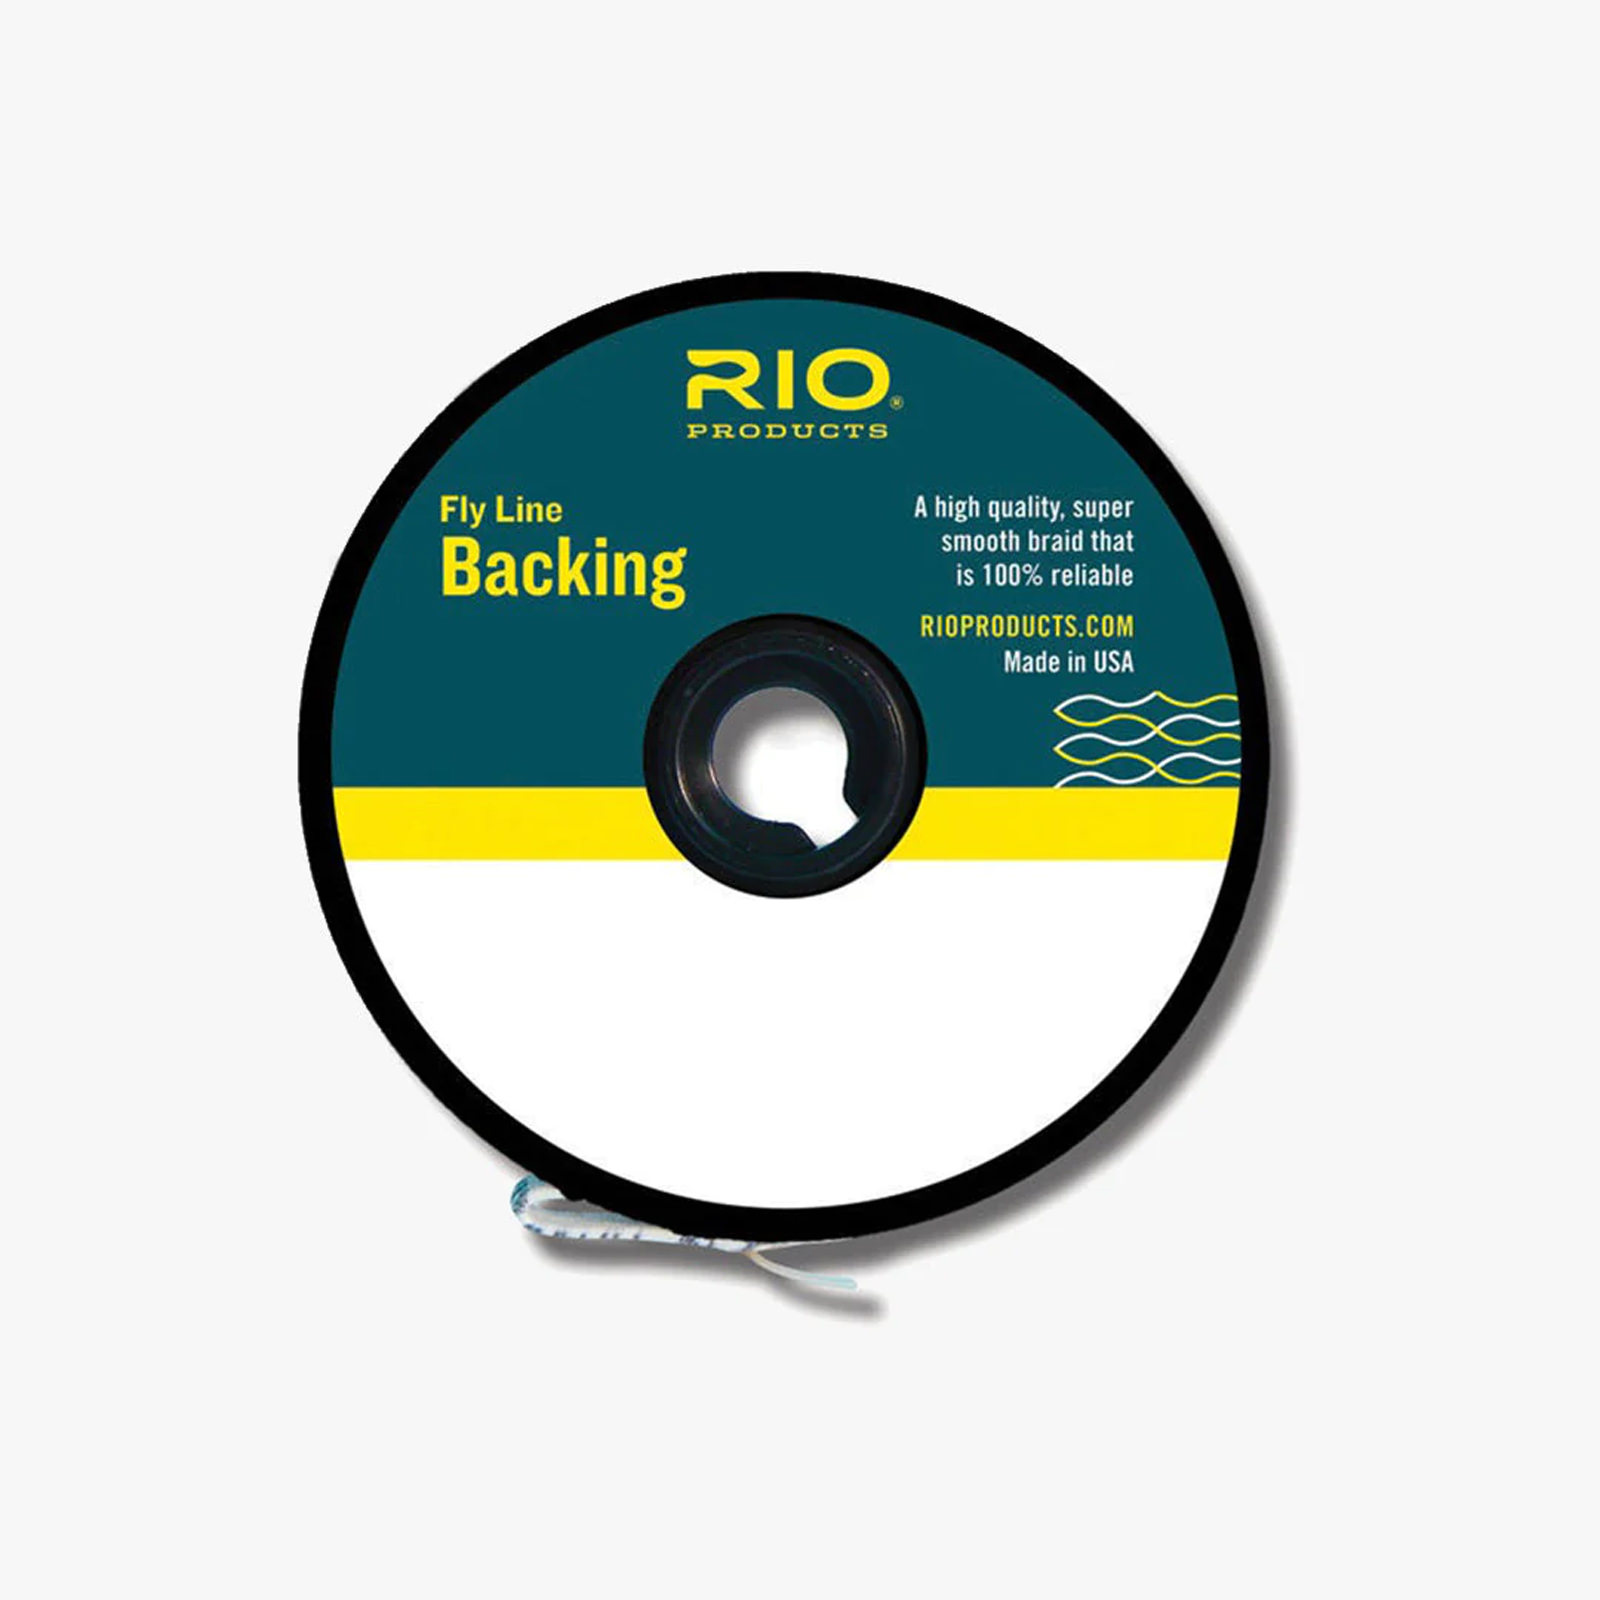 Rio Gel Spun Backing 200yd / Chartreuse